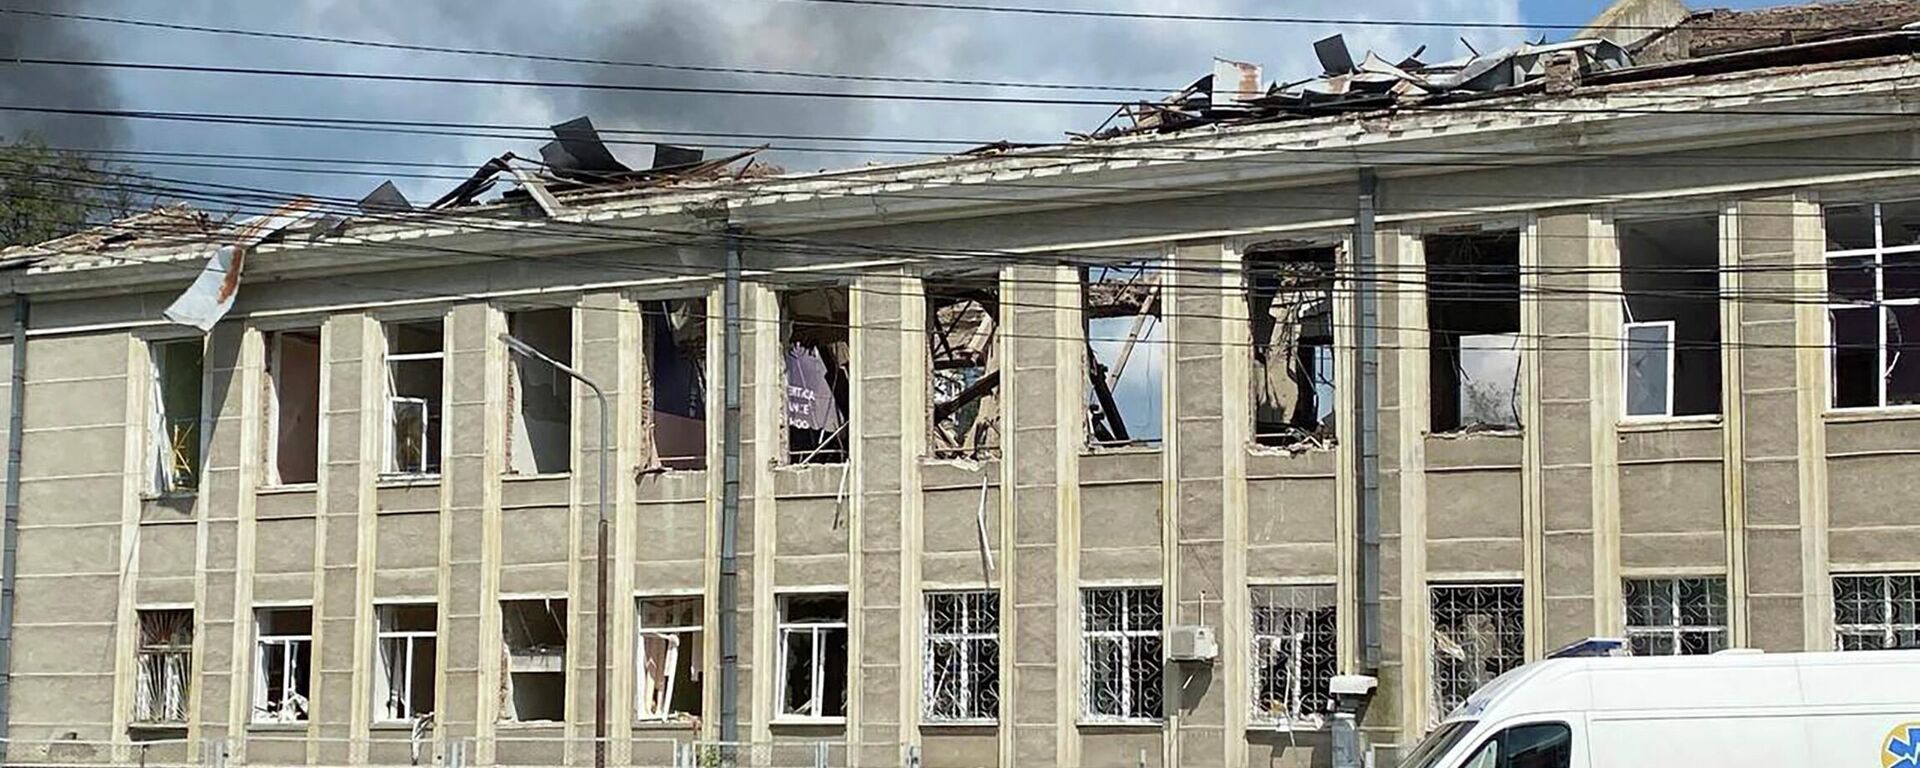 In this photo provided by the Ukrainian Emergency Service, an ambulance parked near a building damaged by shelling in Vinnytsa, Ukraine - Sputnik International, 1920, 14.07.2022